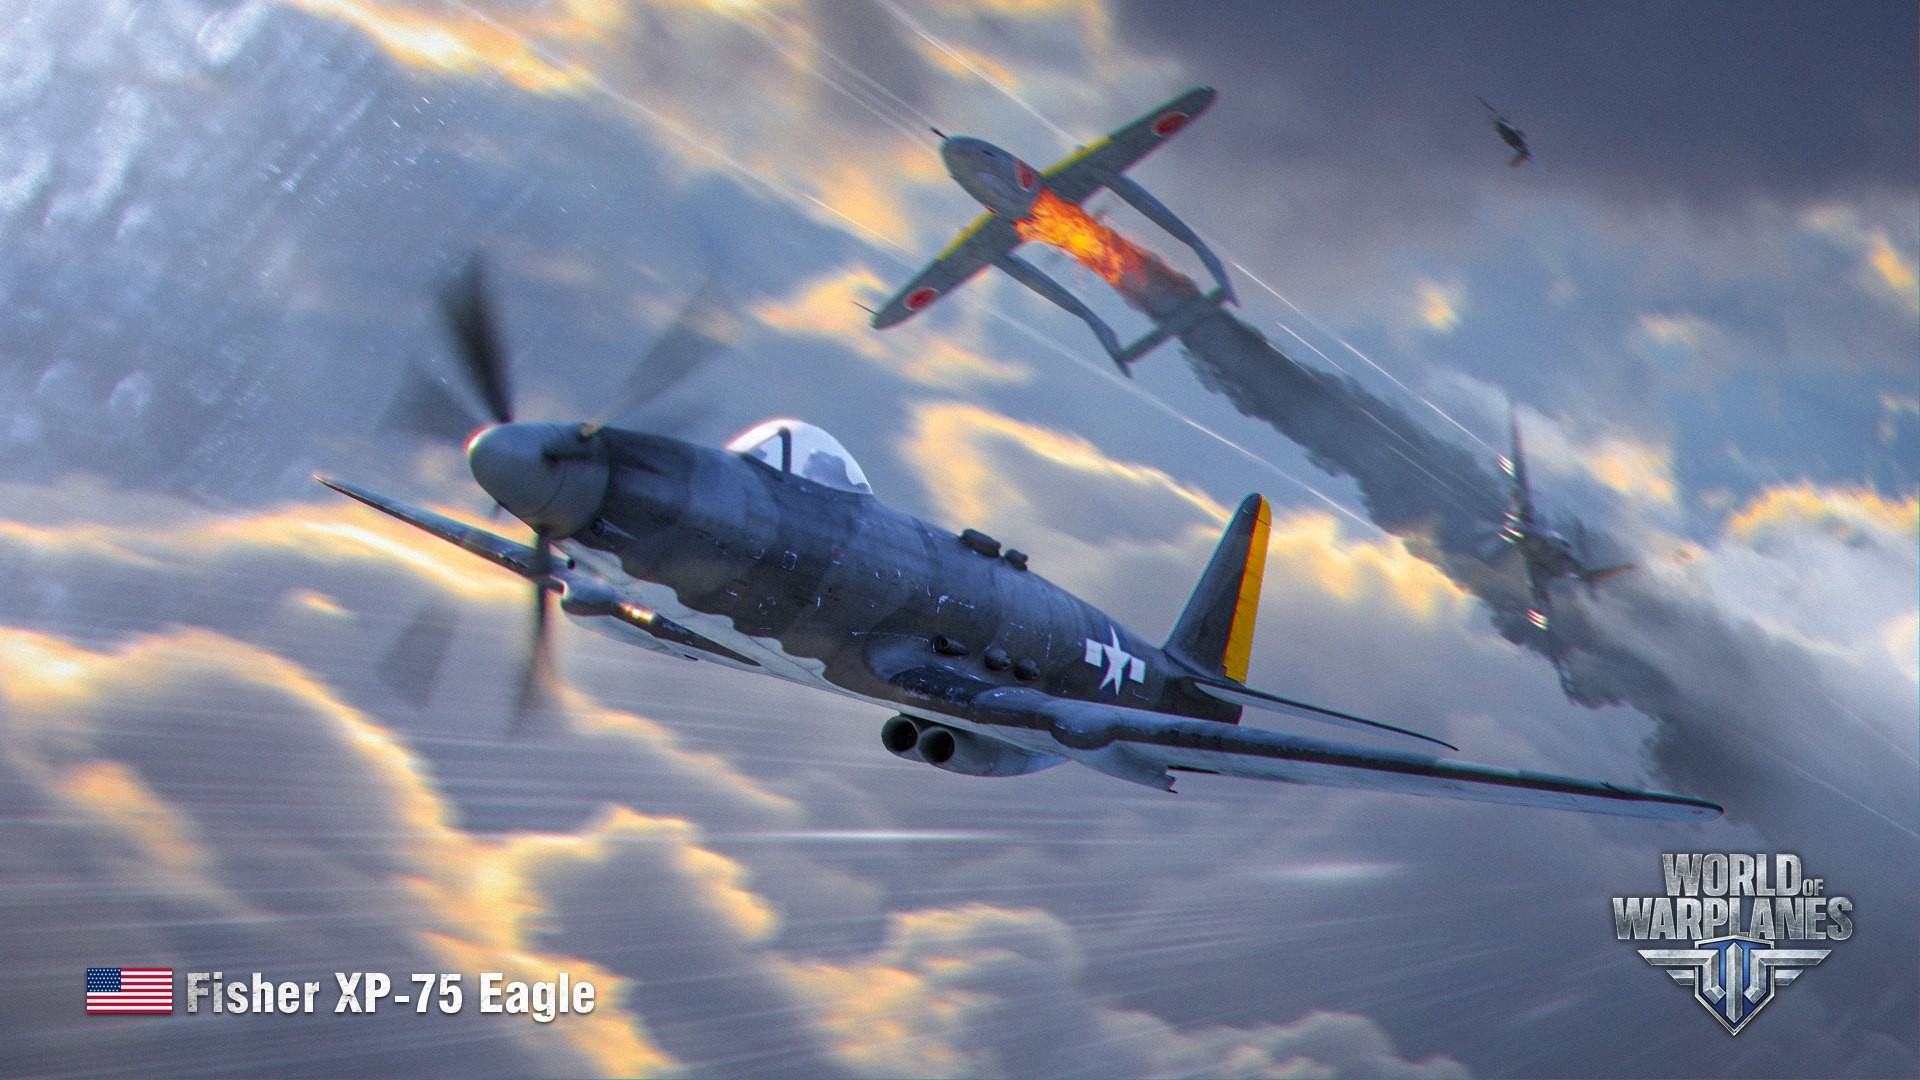 General 1920x1080 World of Warplanes military aircraft airplane wargaming video games American aircraft